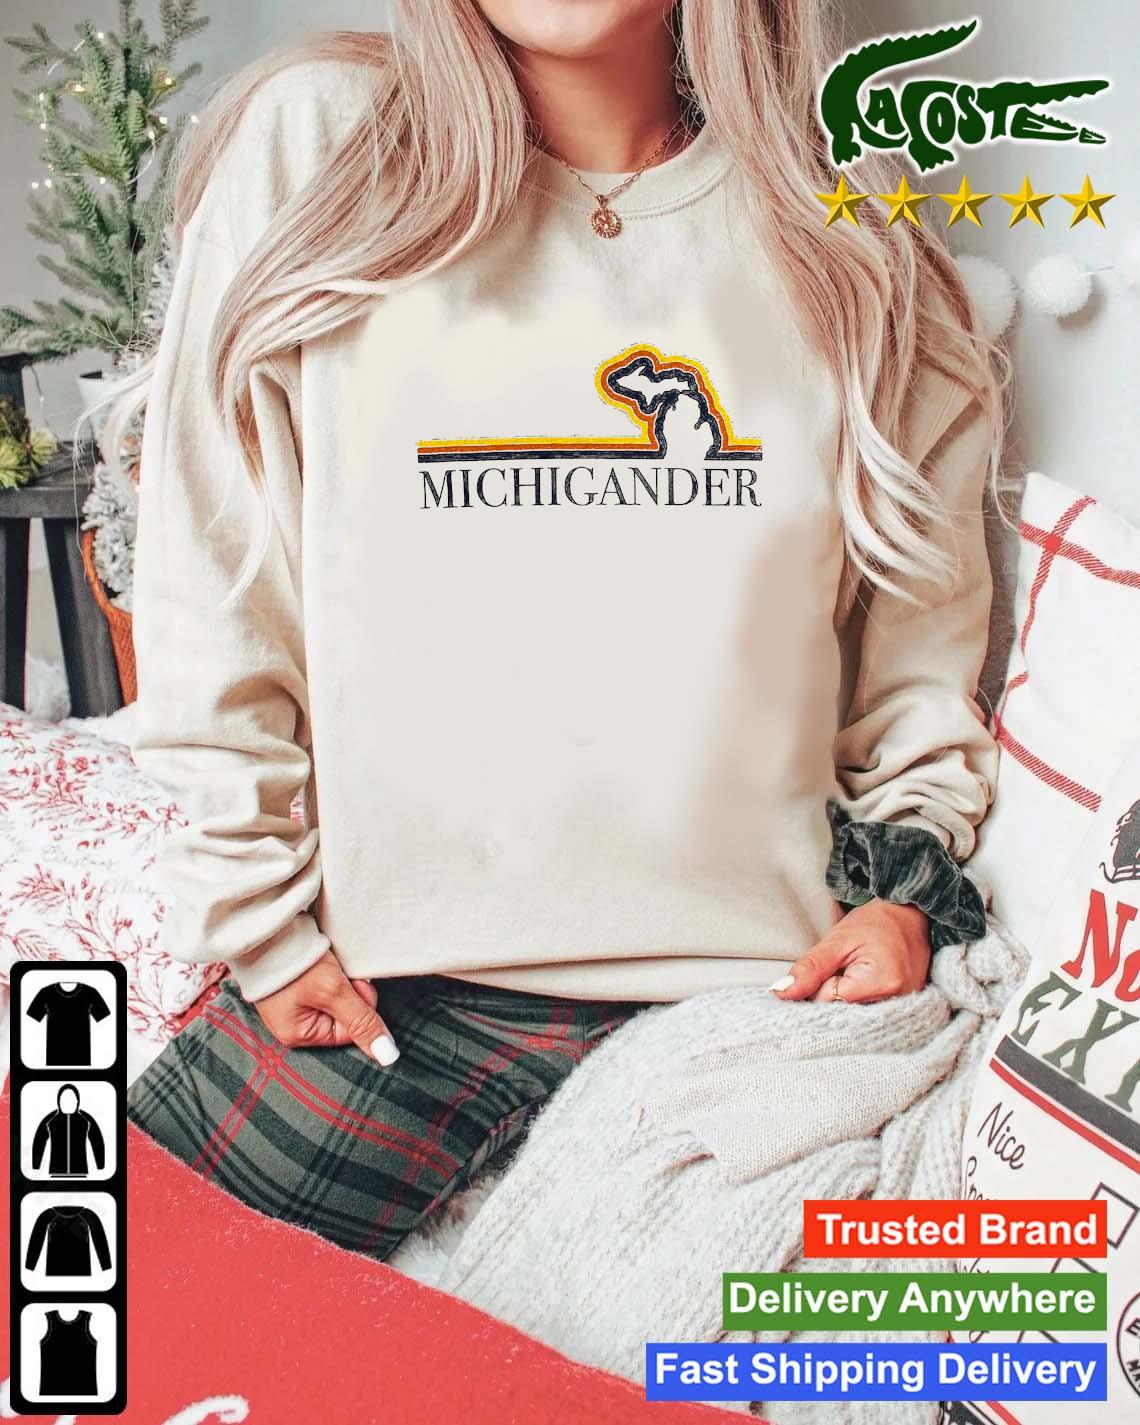 Michigander Stripes Sweats Mockup Sweater